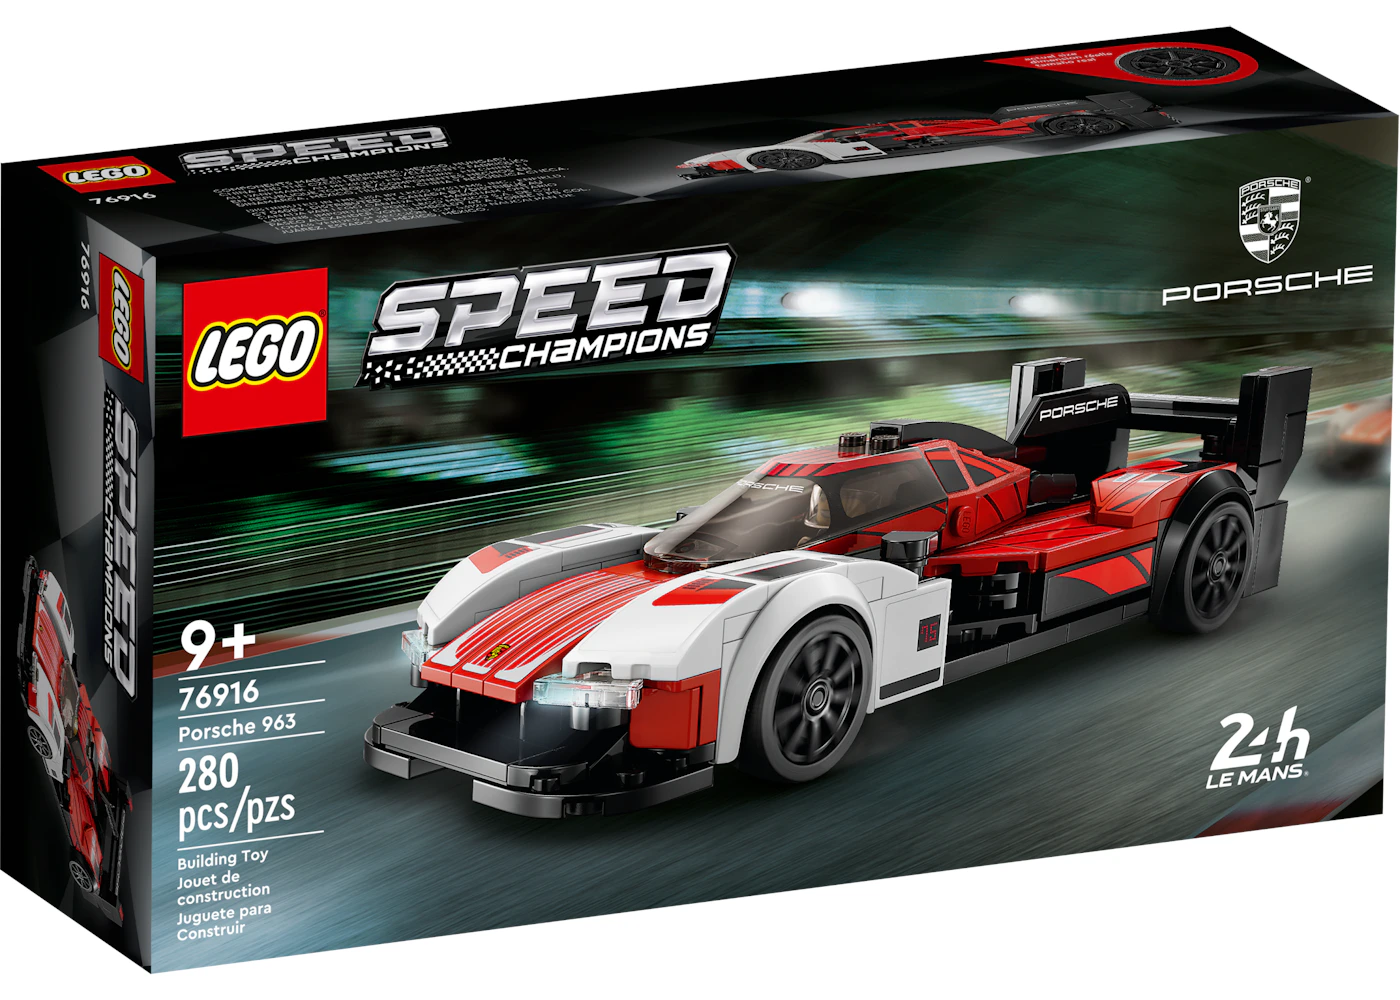 LEGO Speed Champions Porsche 963 Set 76916 - US